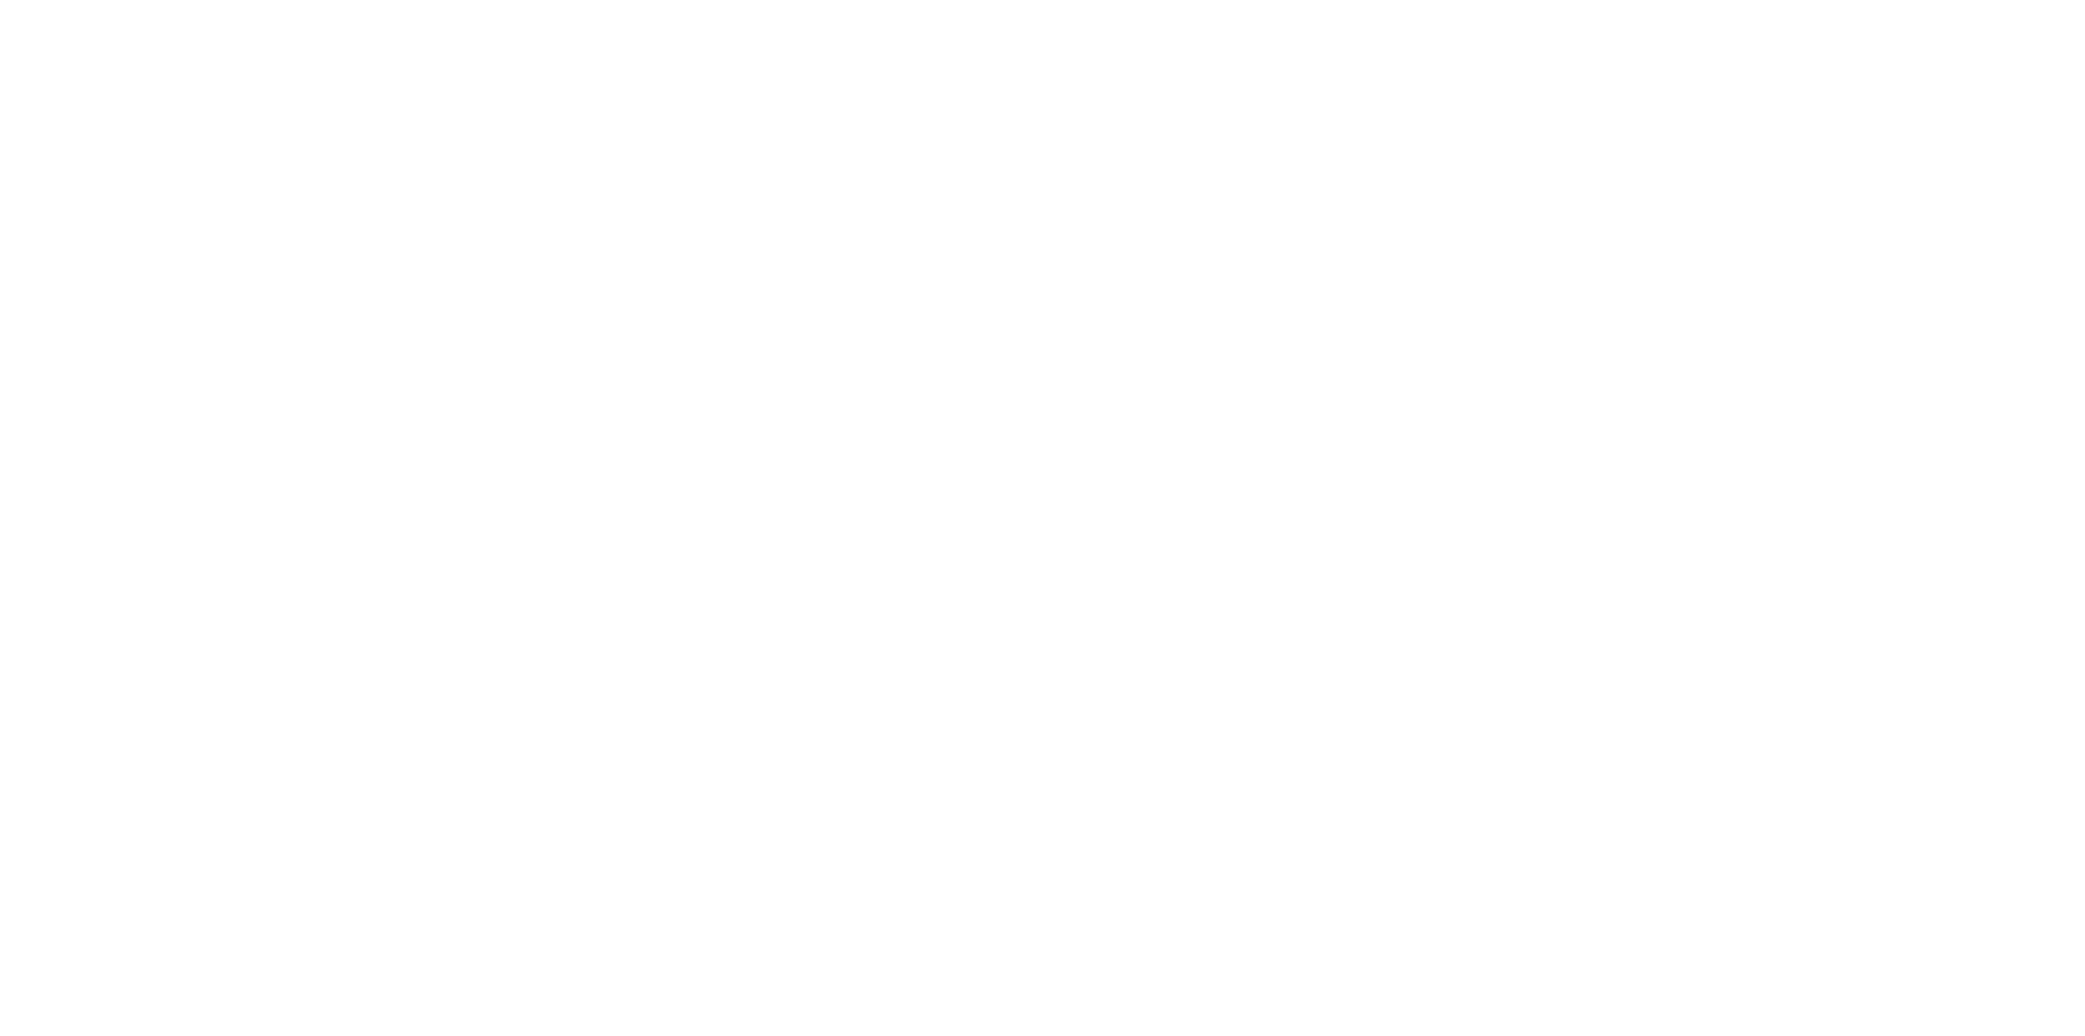 St Mary School